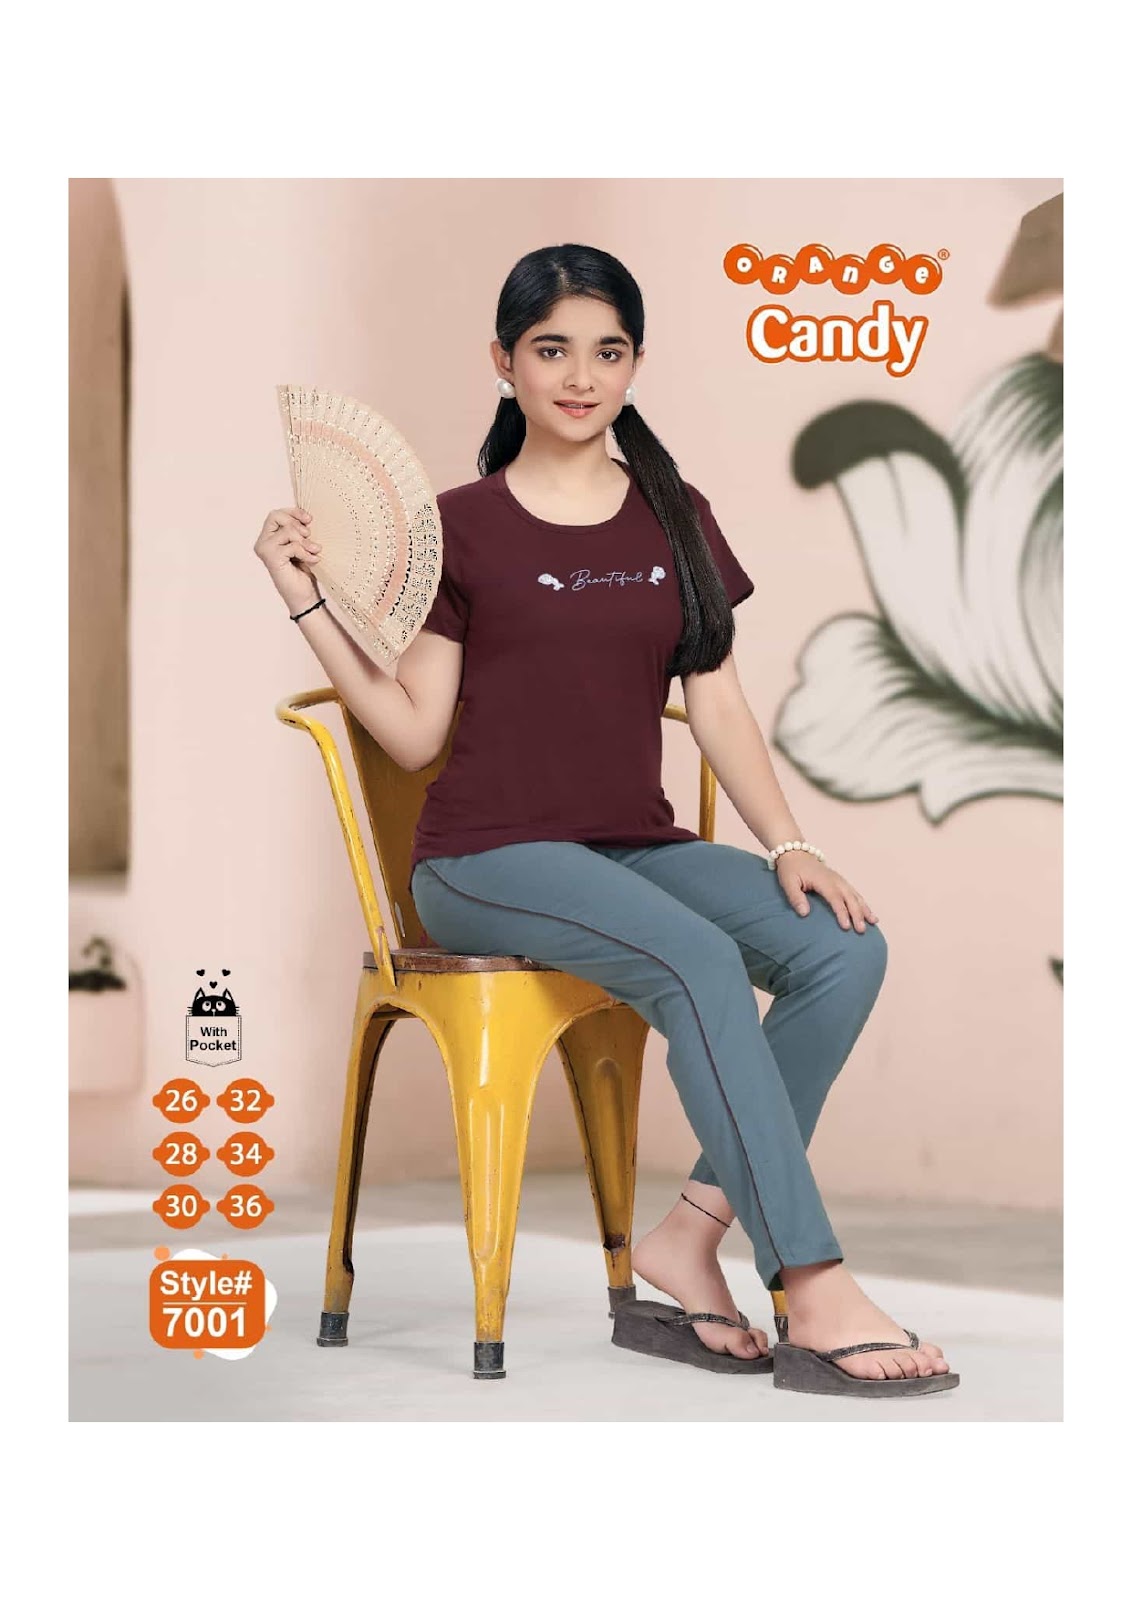 7001 Orange Candy Hosiery Cotton Girls Night Suits